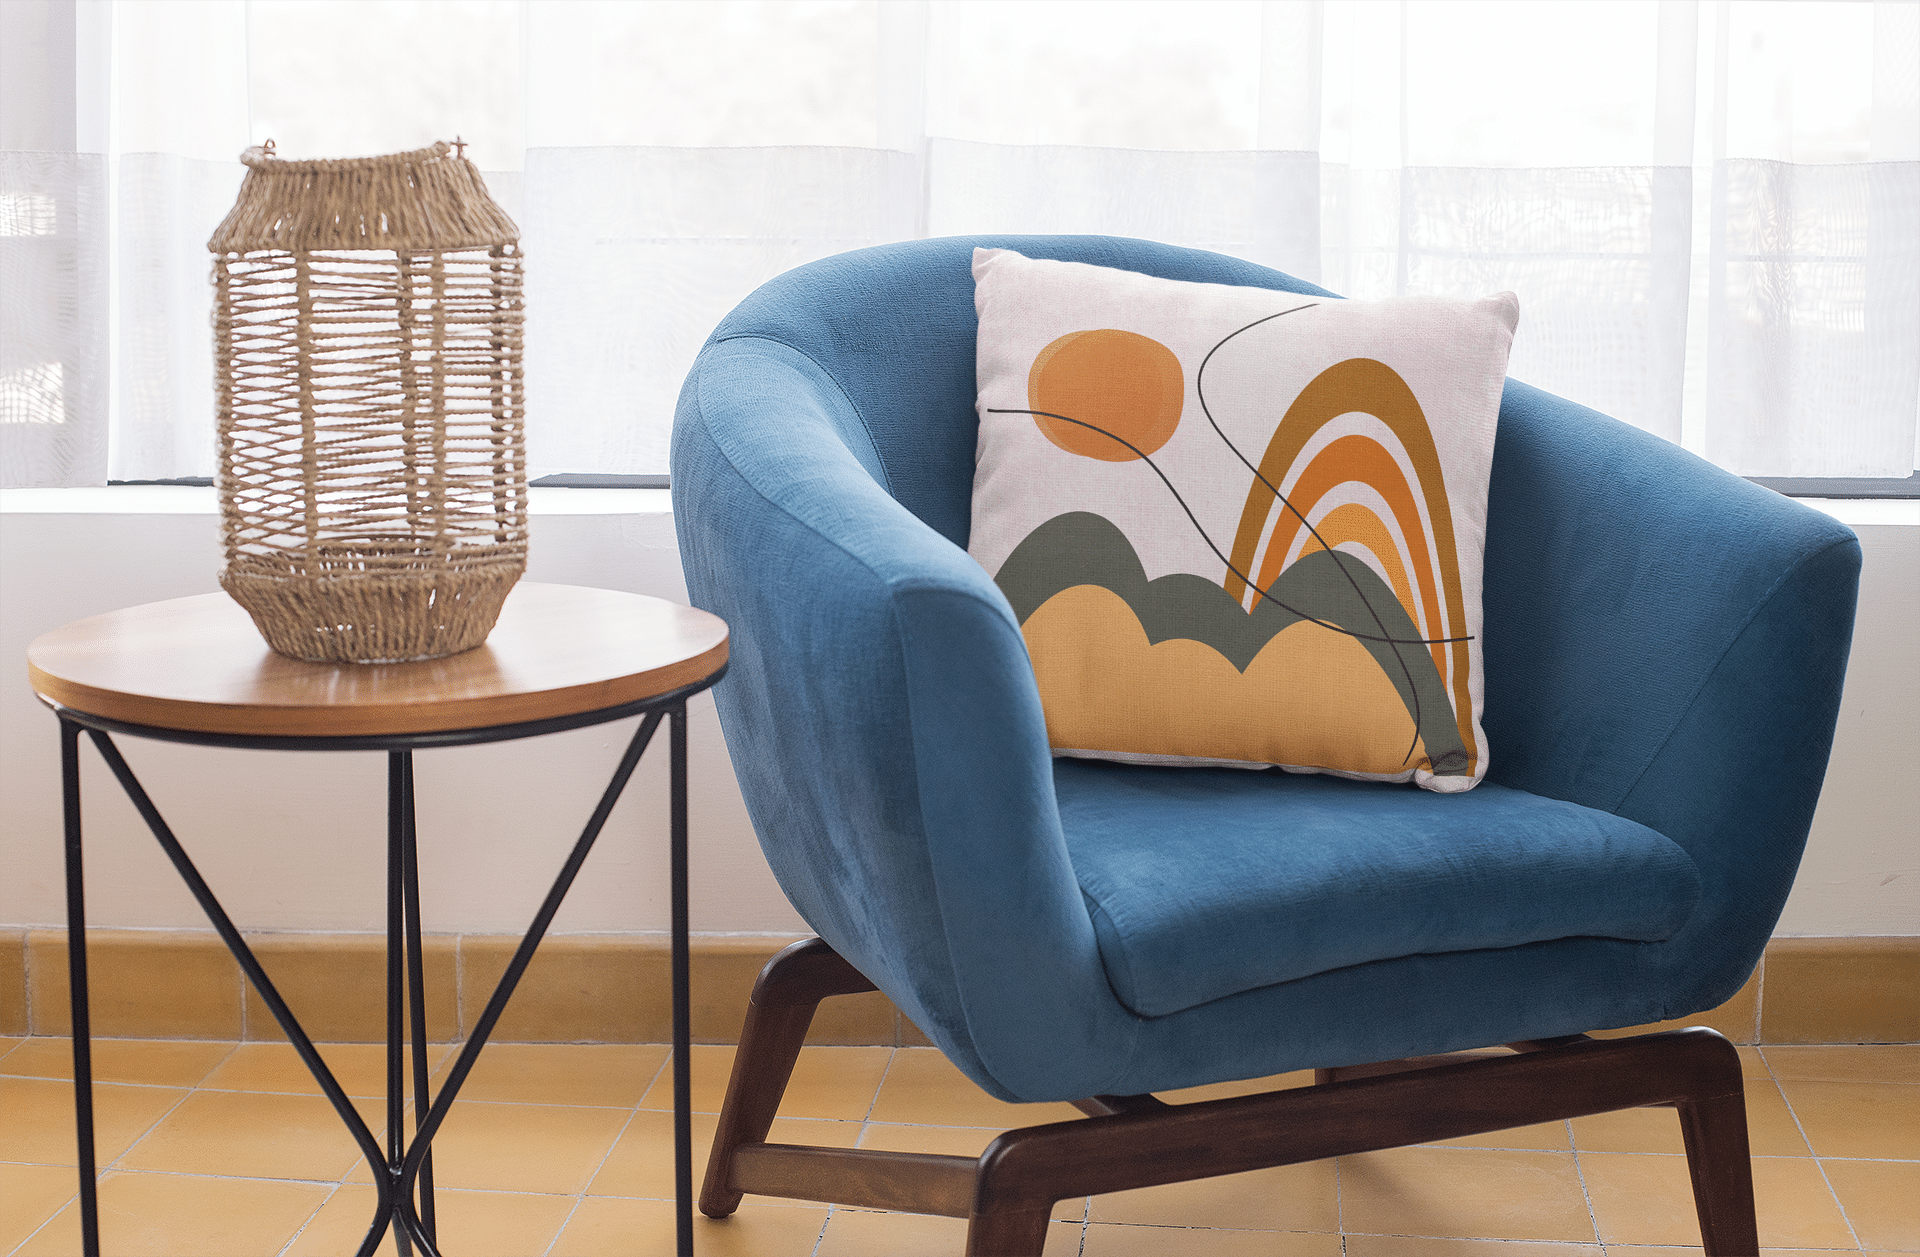 Shop Morning Sun Geometric Art Decorative Throw Pillow Cushion, Pillow, USA Boutique